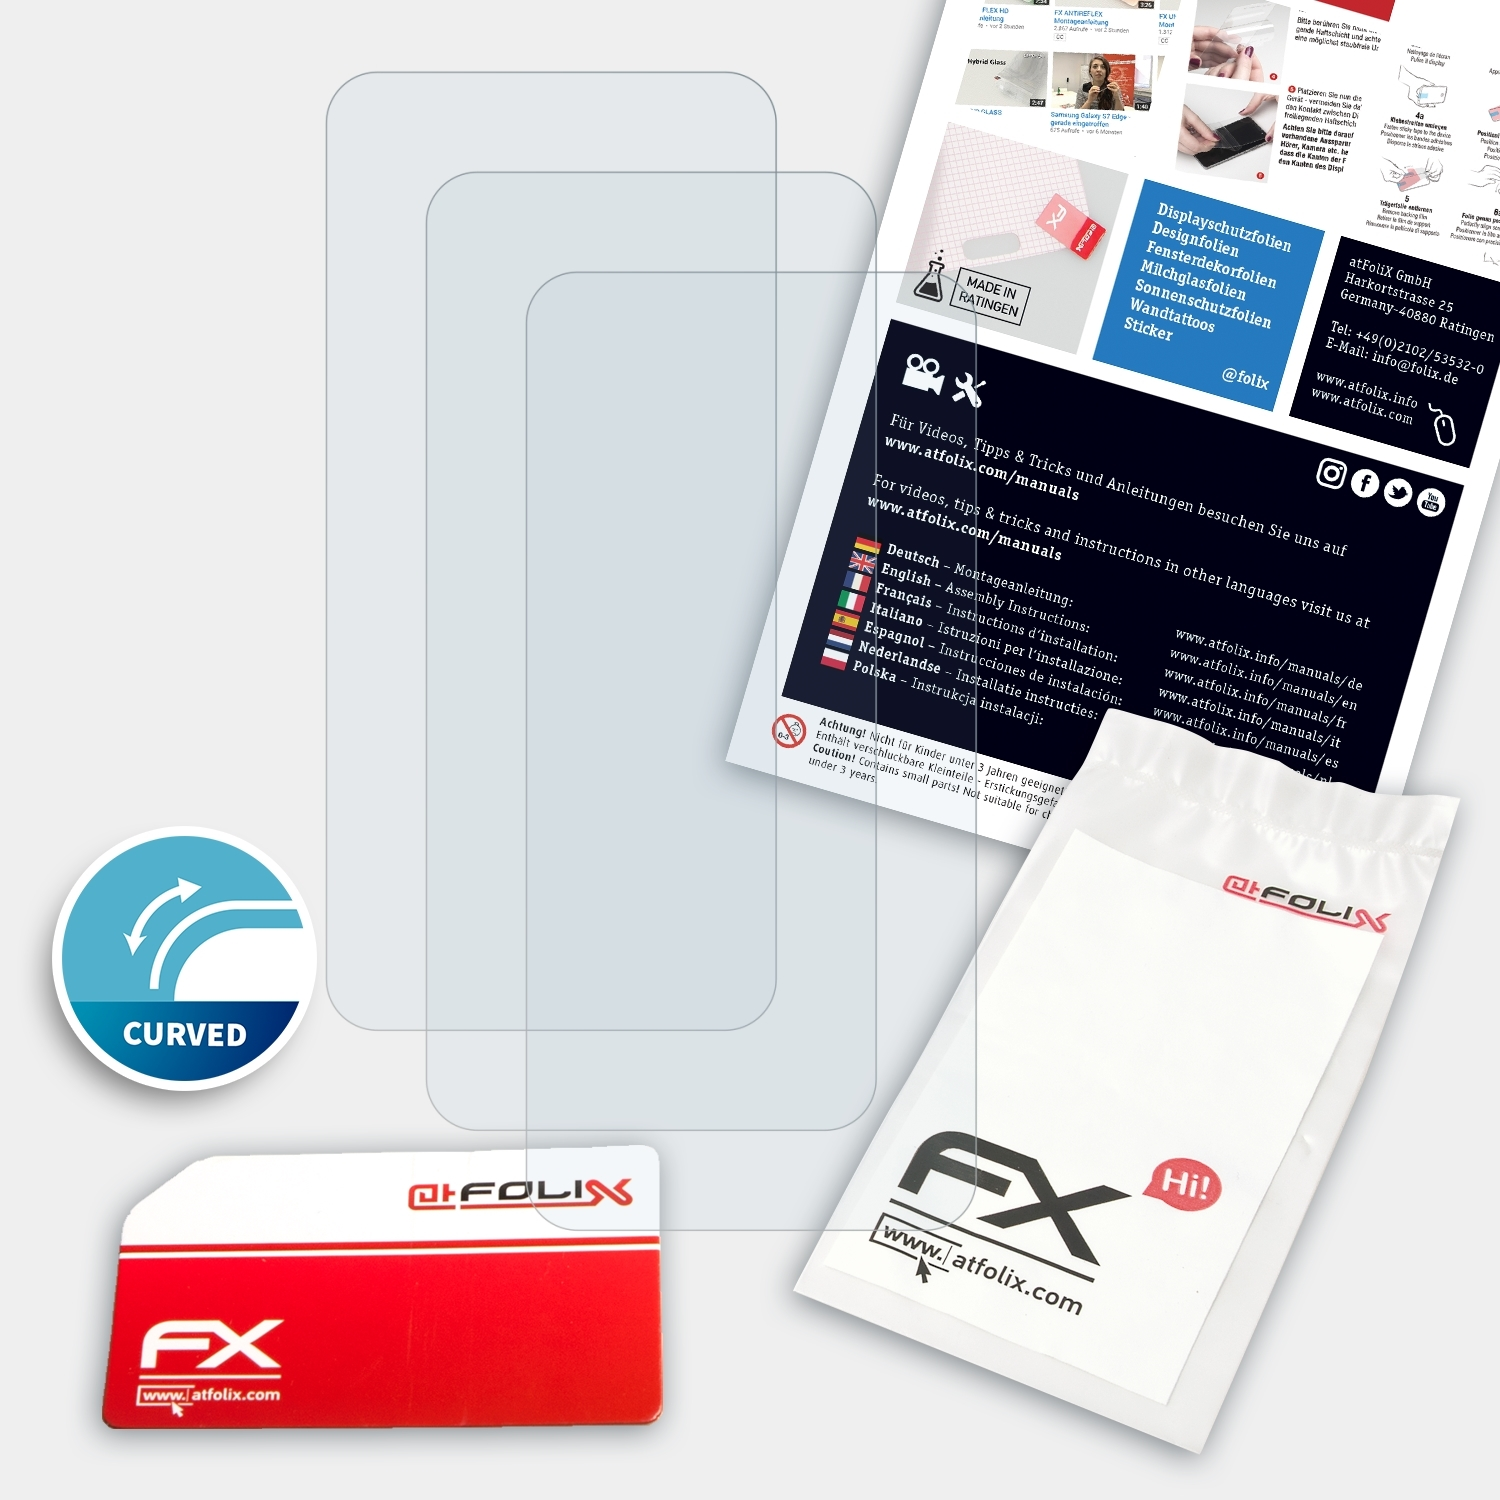 ATFOLIX Displayschutz(für FX-ActiFleX NEX) Vivo 3x